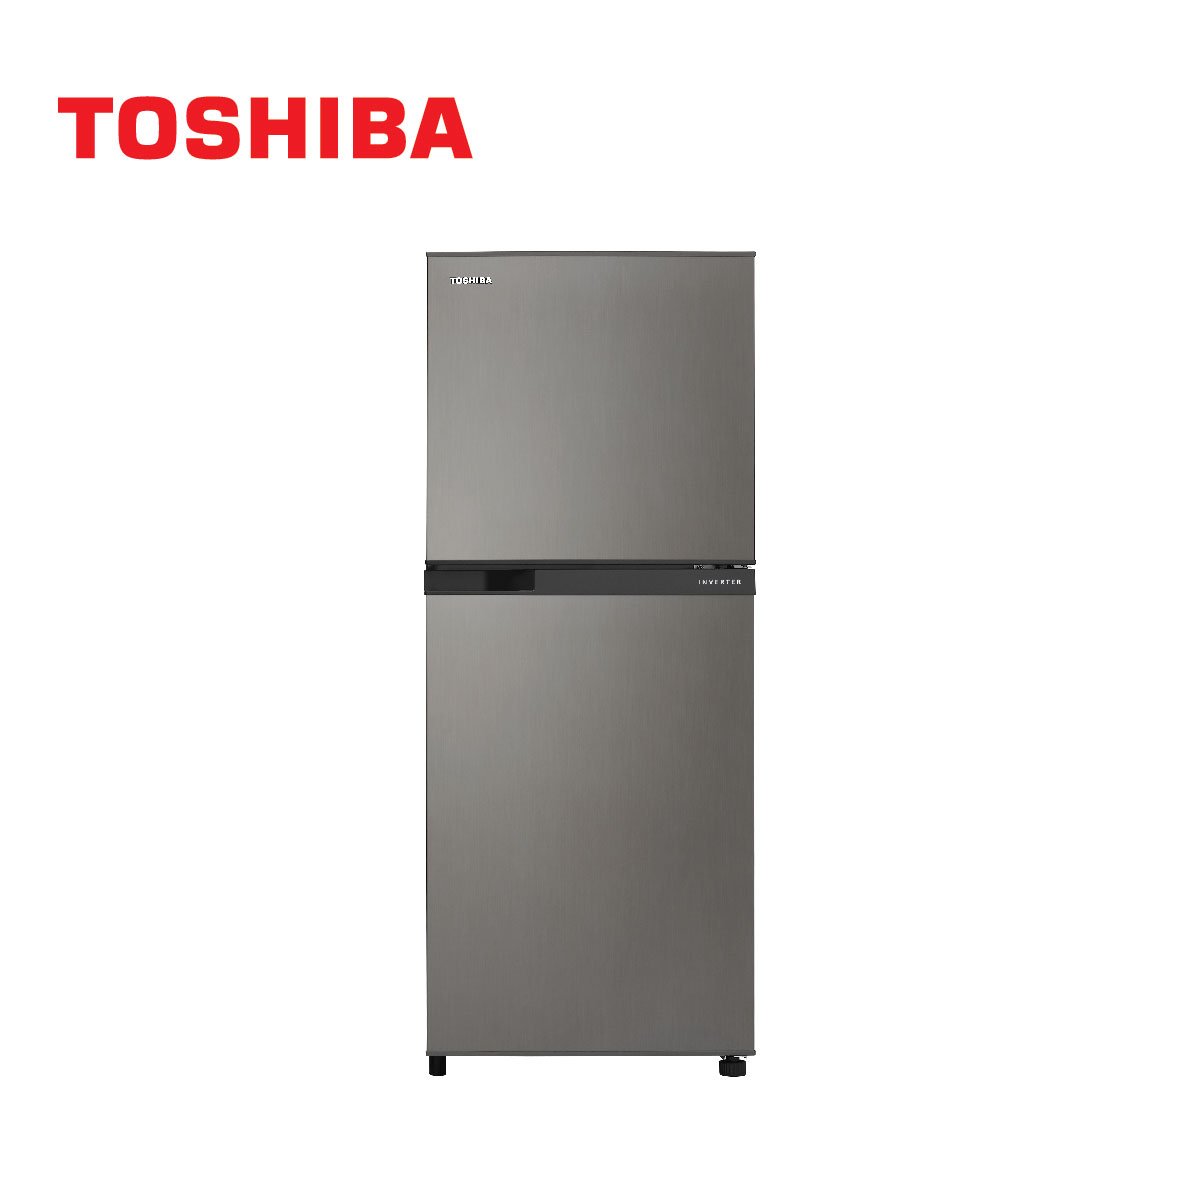 Great Value Matters Toshiba 7 Cu. Ft. Refrigerator